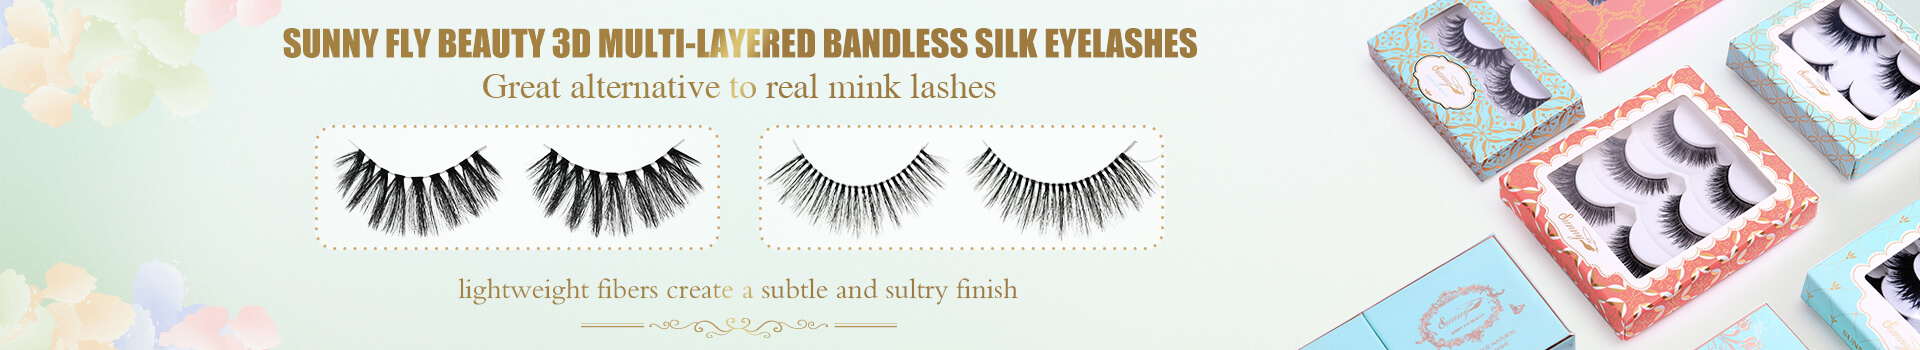 3D Multi-Layered Bandless Silk Eyelas TA09